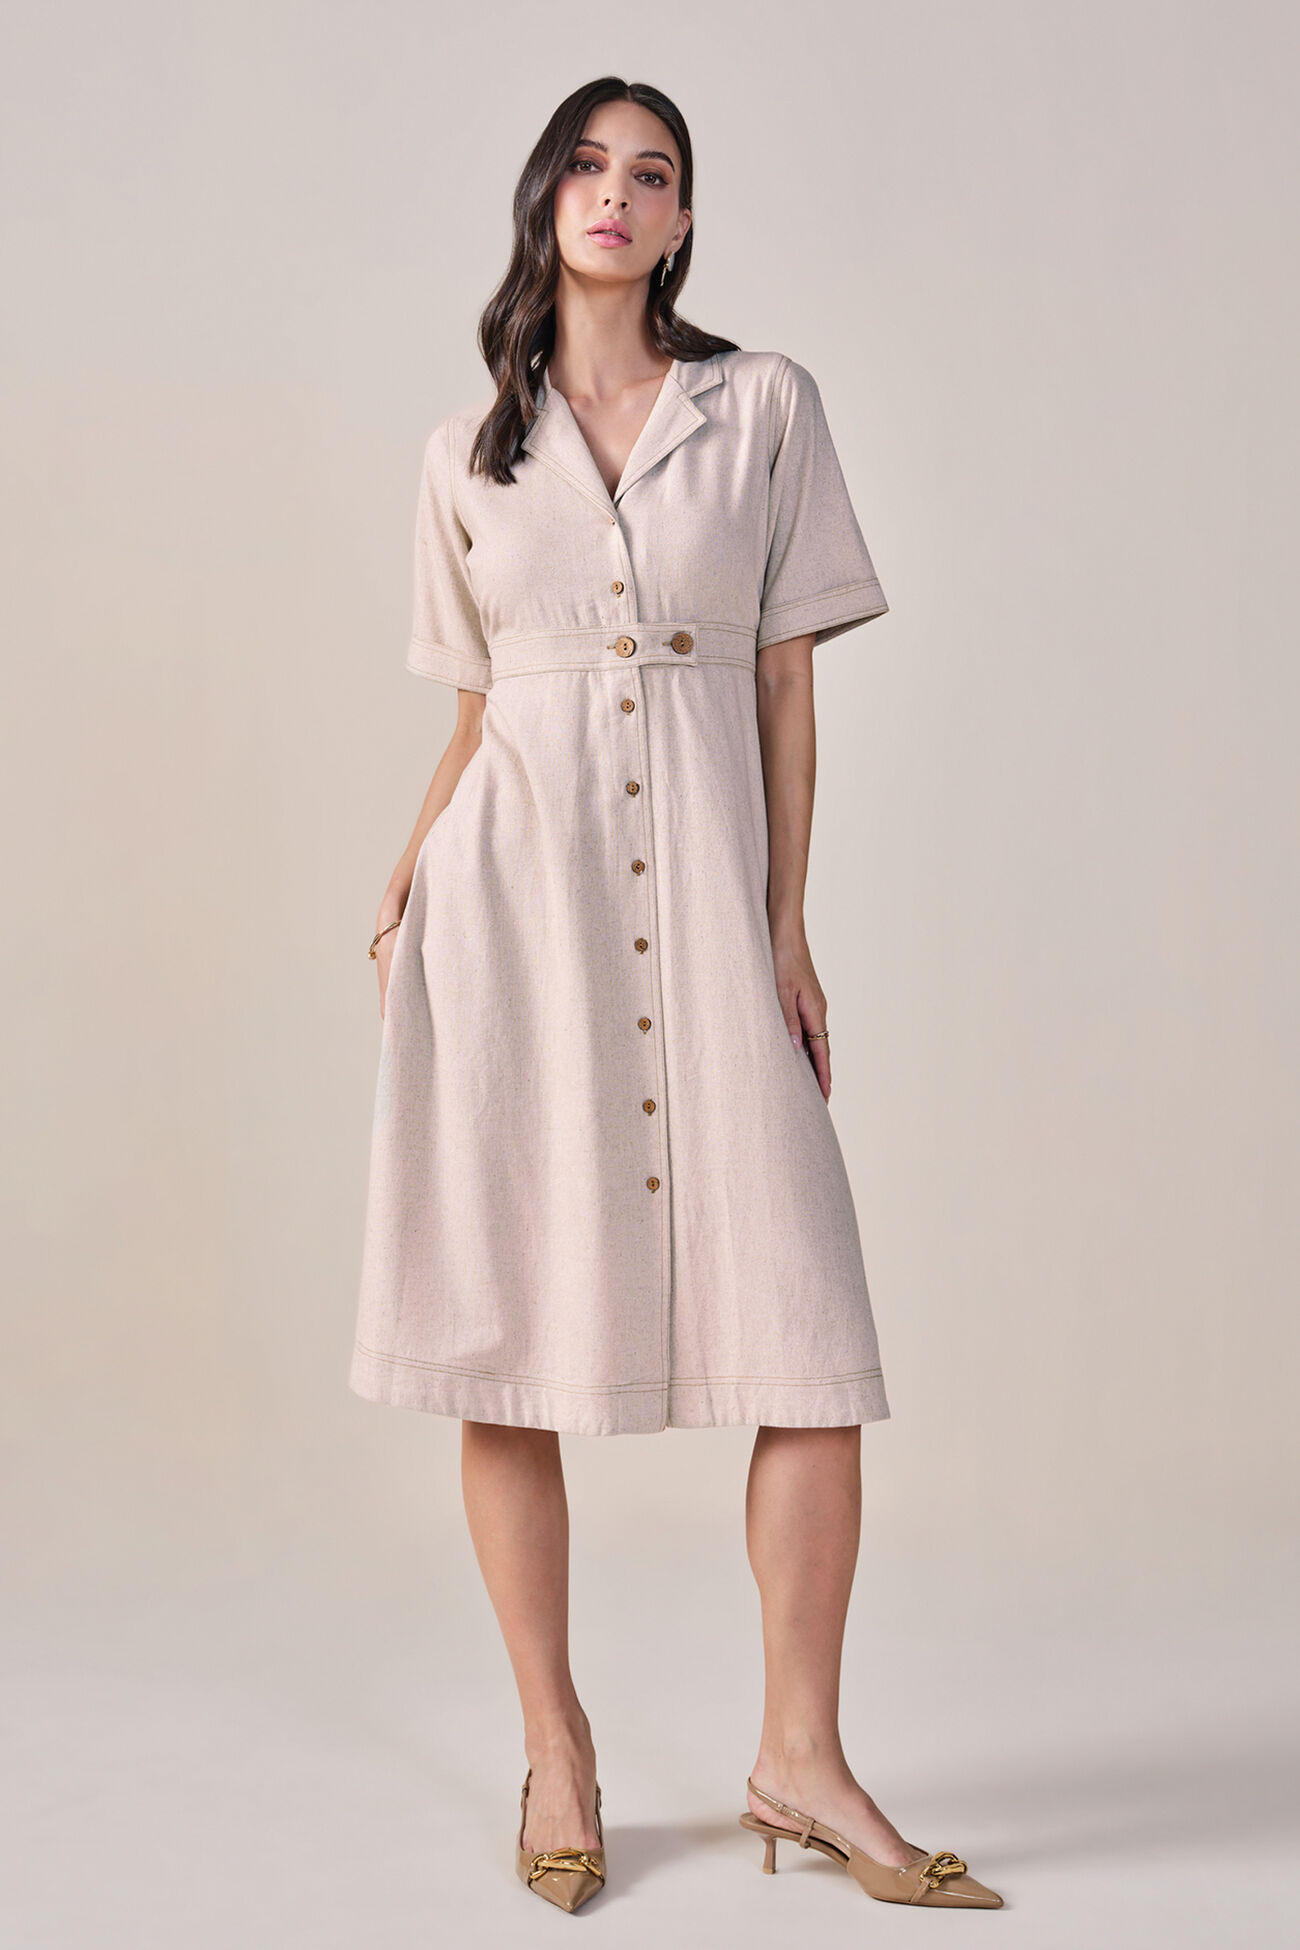 Urbanic Viscose Linen Blend Dress, Beige, image 1